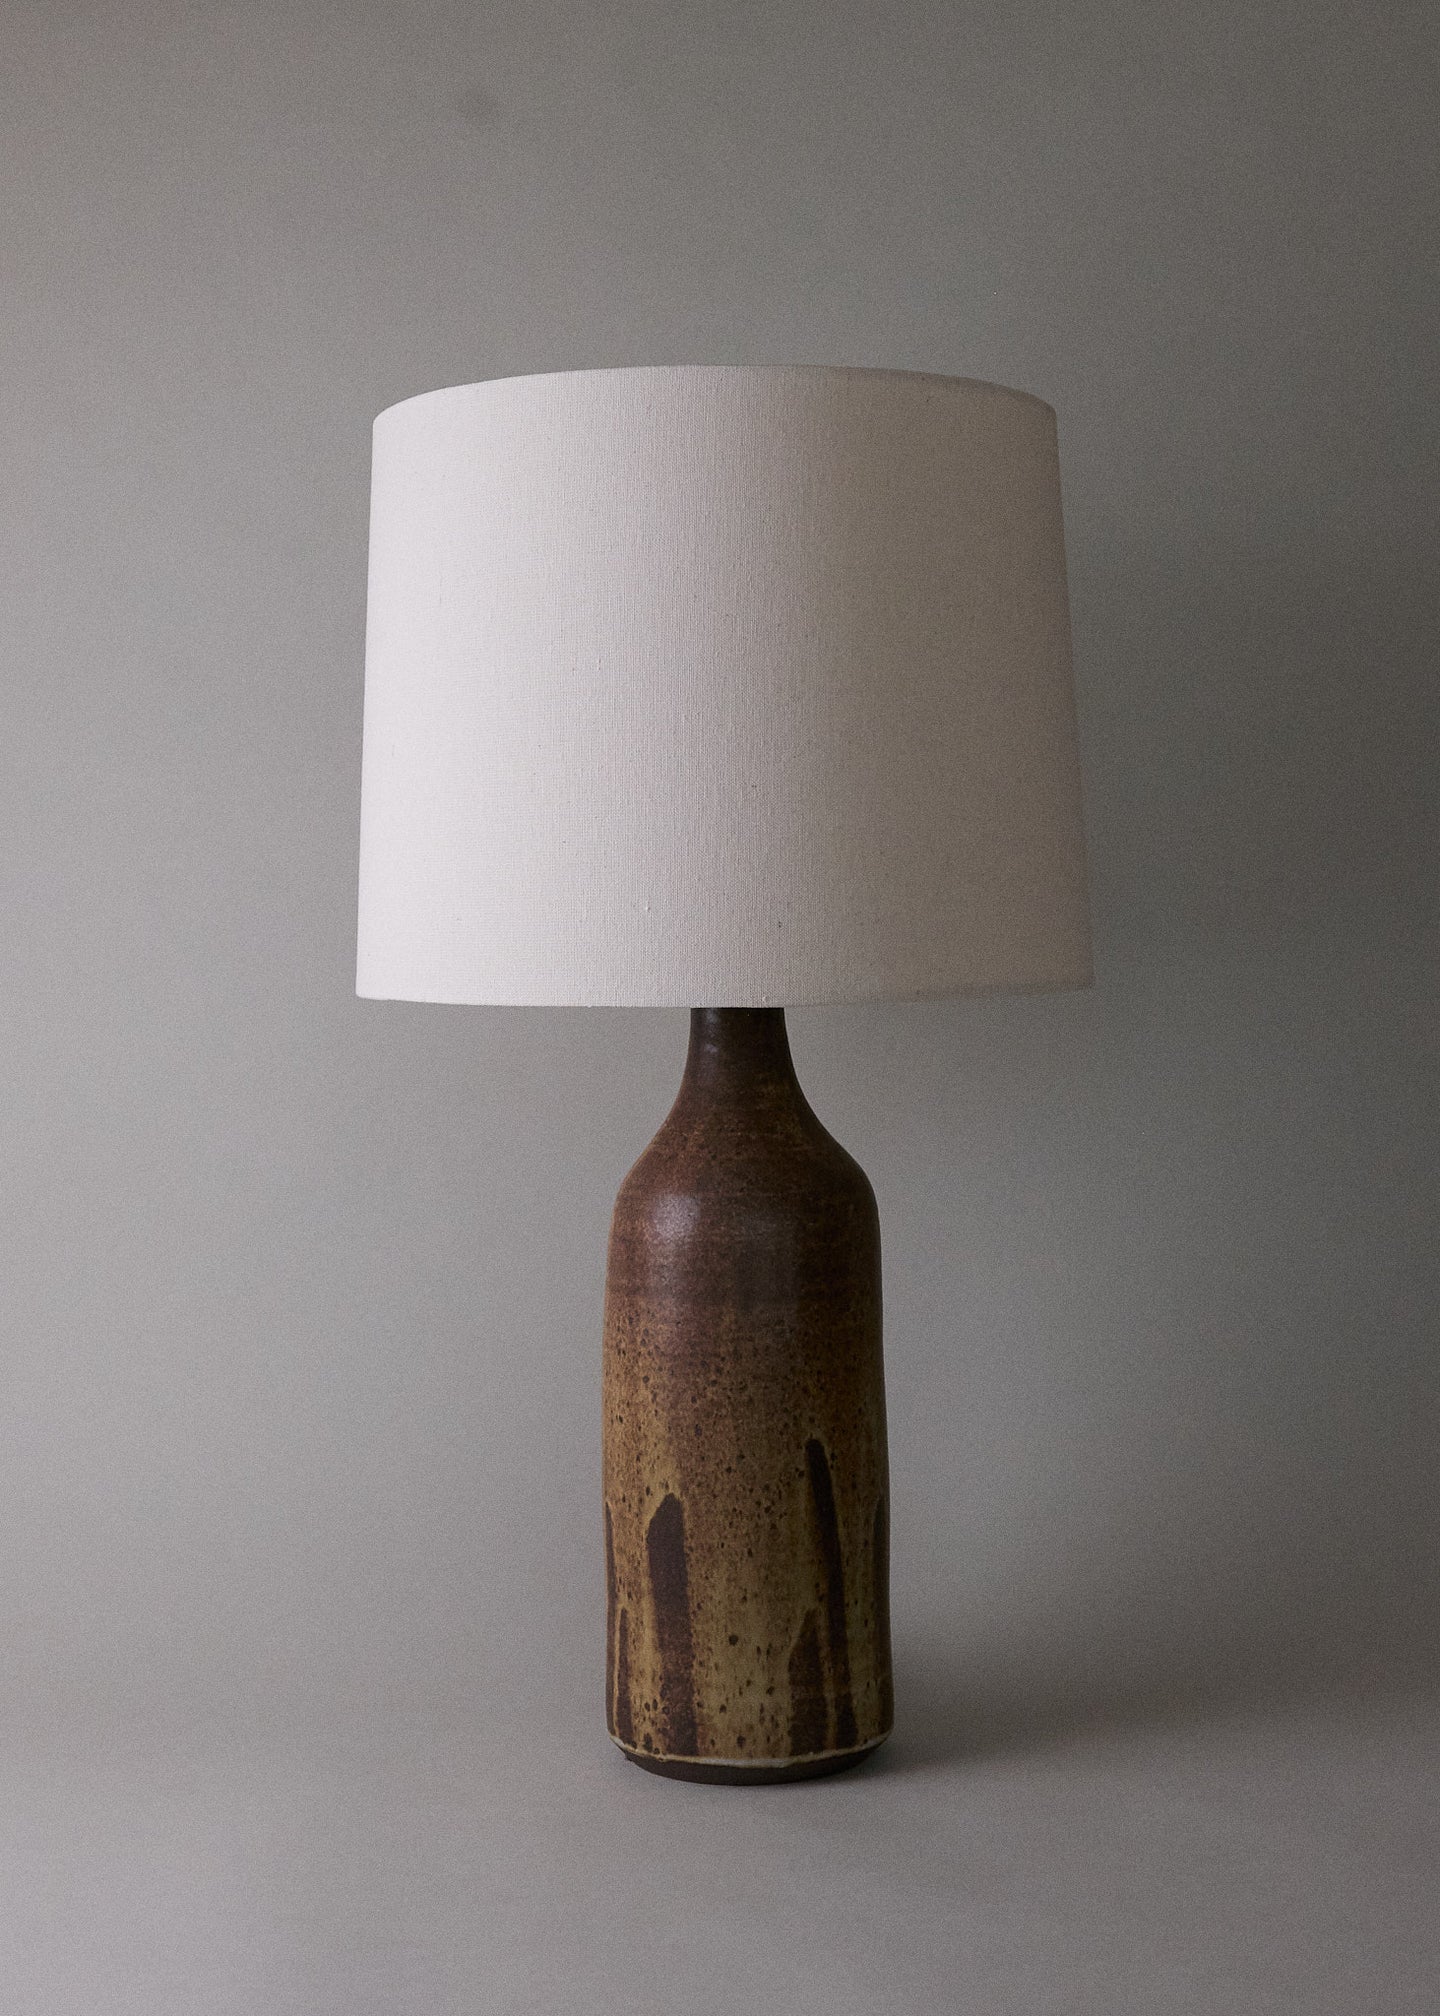 Large Bottle Lamp in Live Oak by Victoria Morris